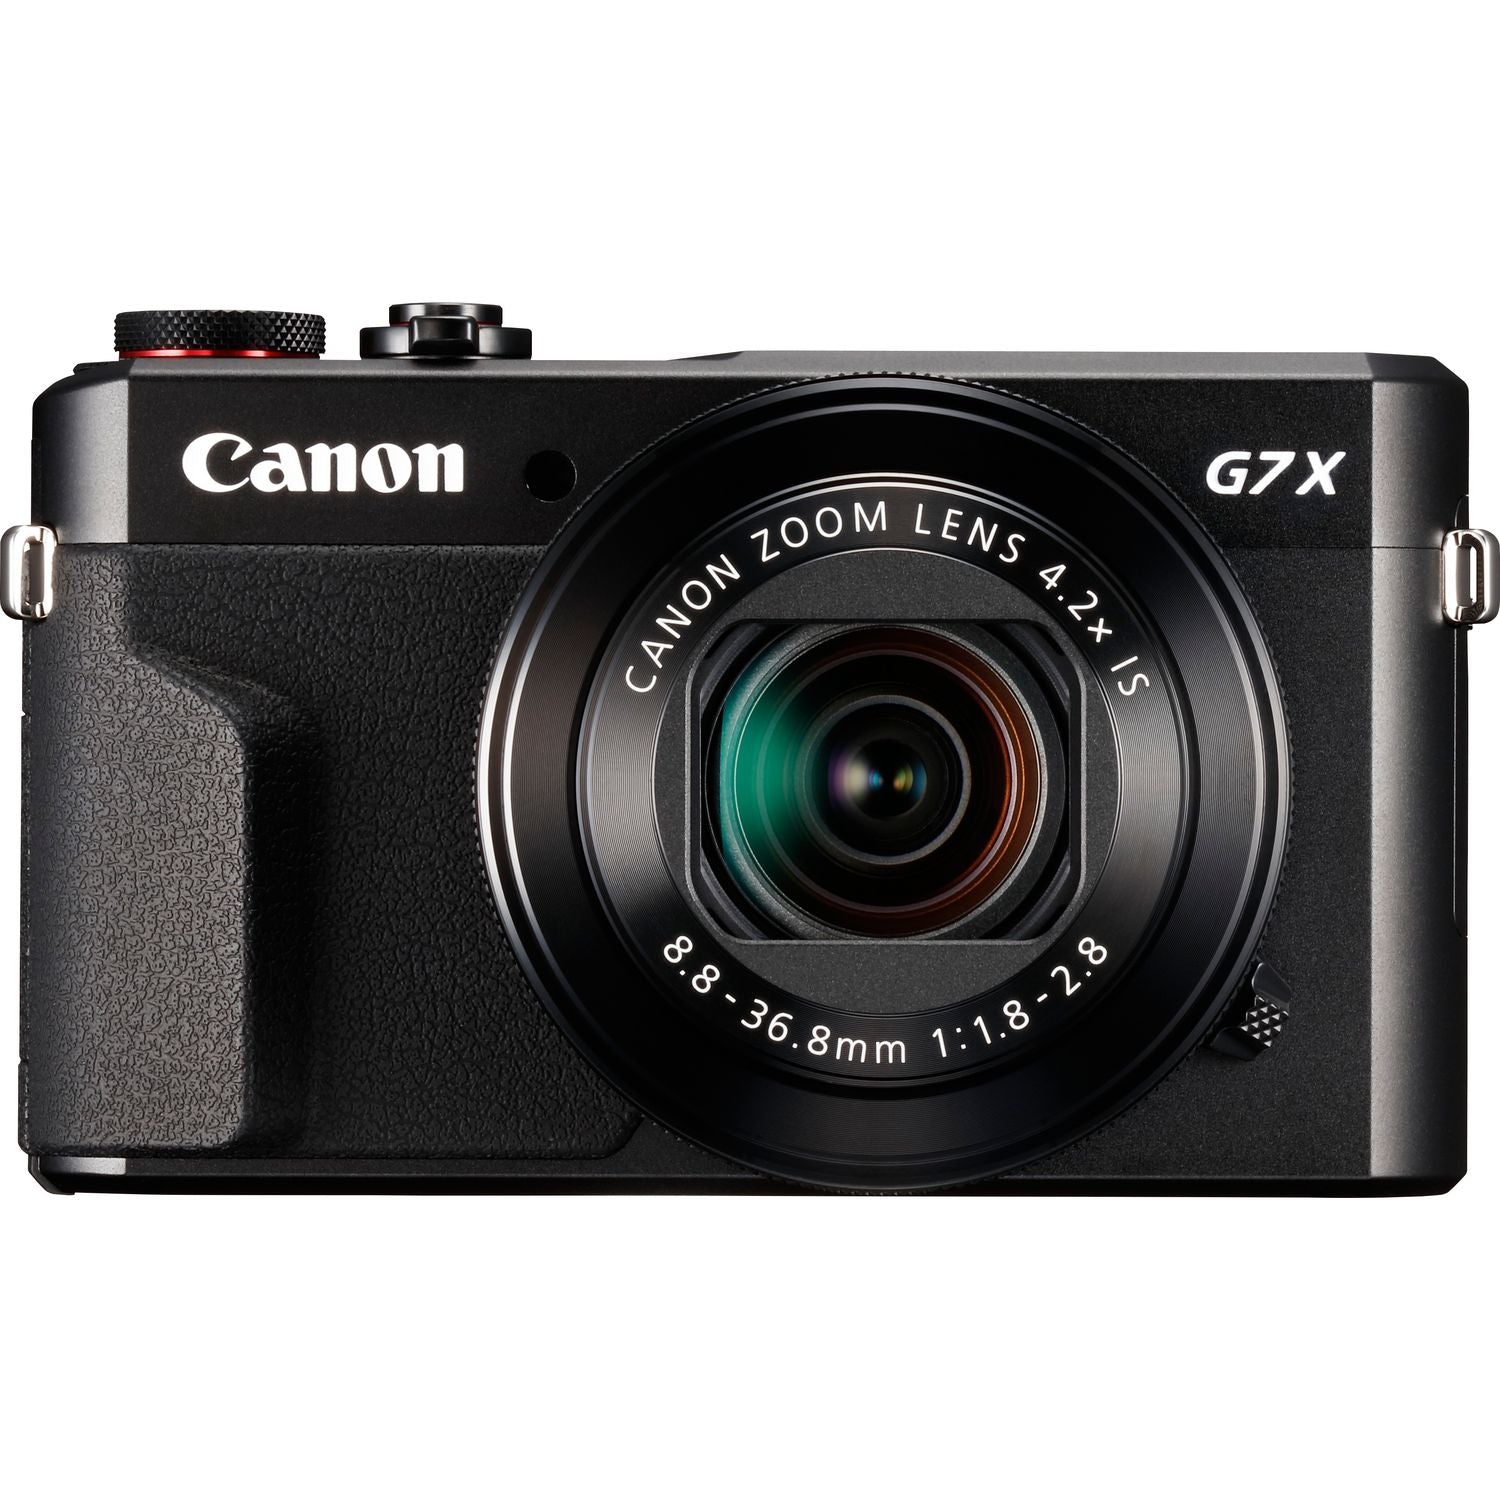 Canon PowerShot G7 X Mark II Digital Camera G7X Mark 2